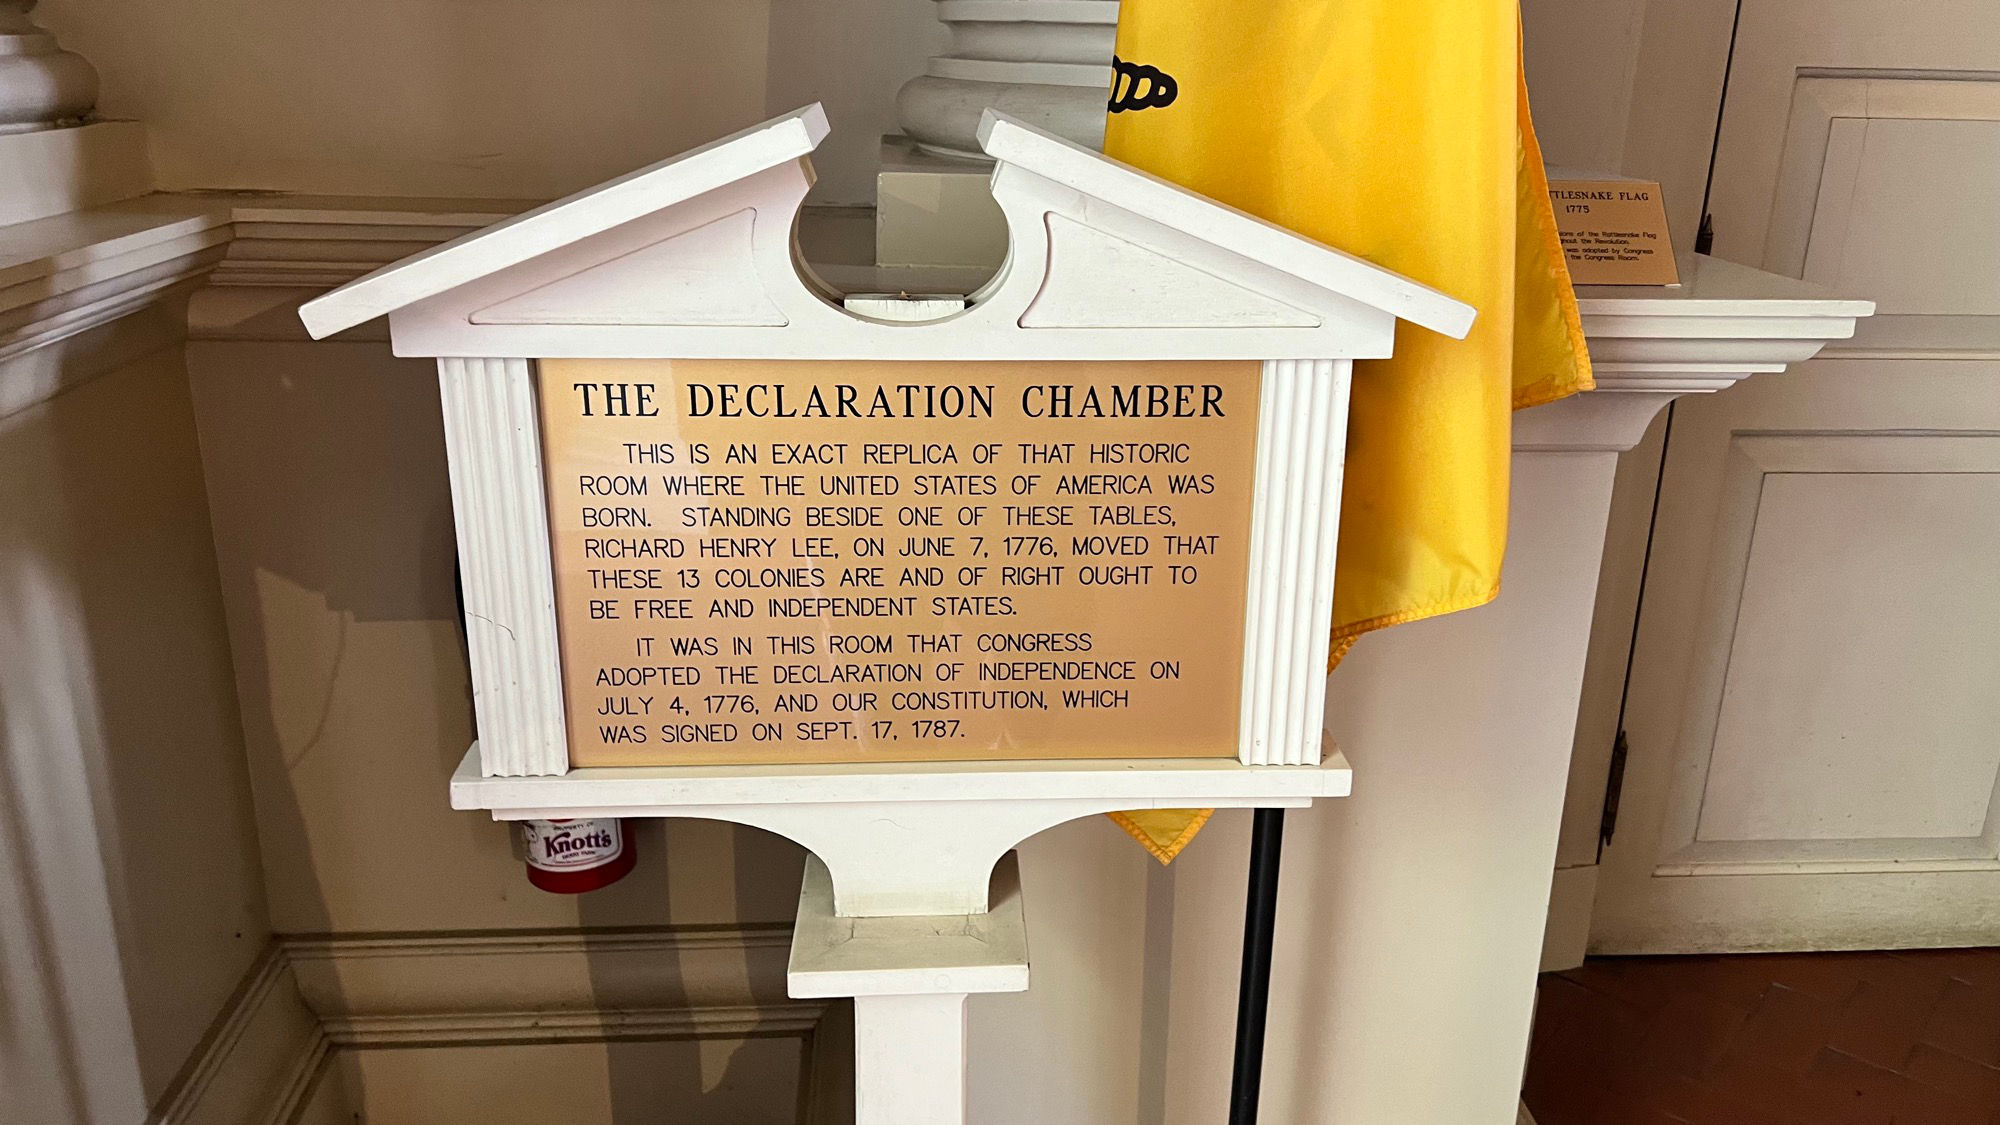 The Declaration Chamber